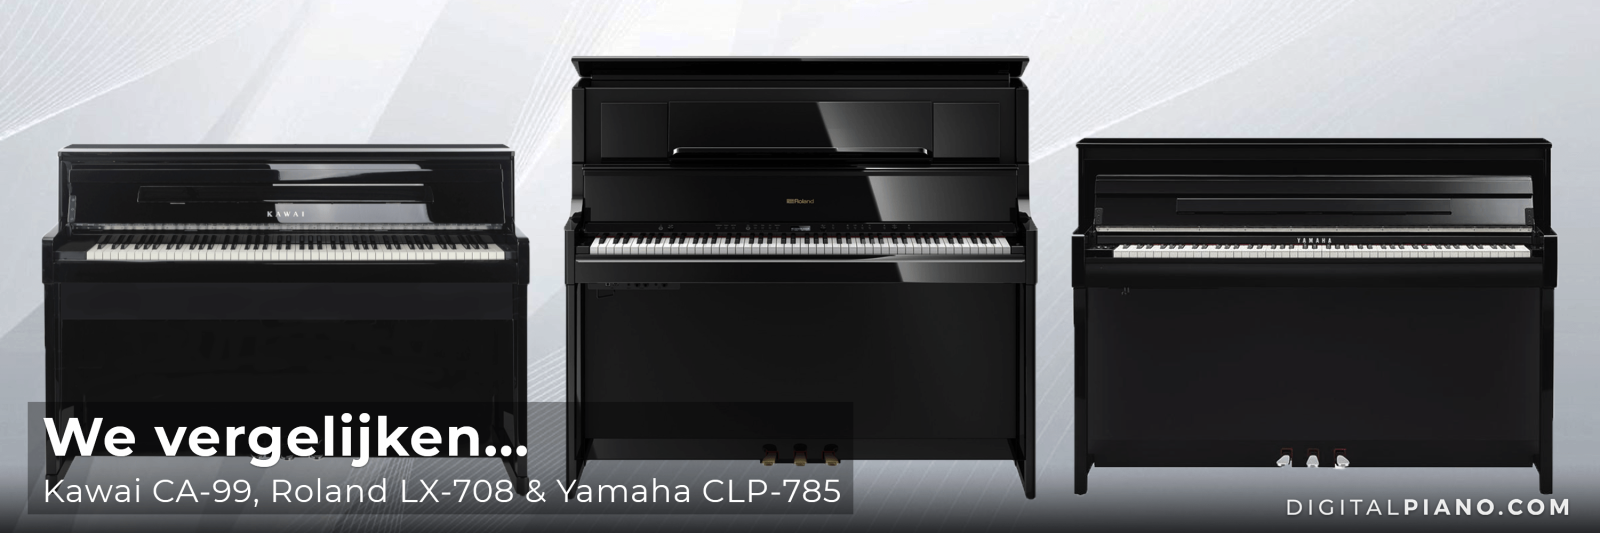 We vergelijken Kawai's CA-99, Roland's LX-708 Yamaha's CLP-785